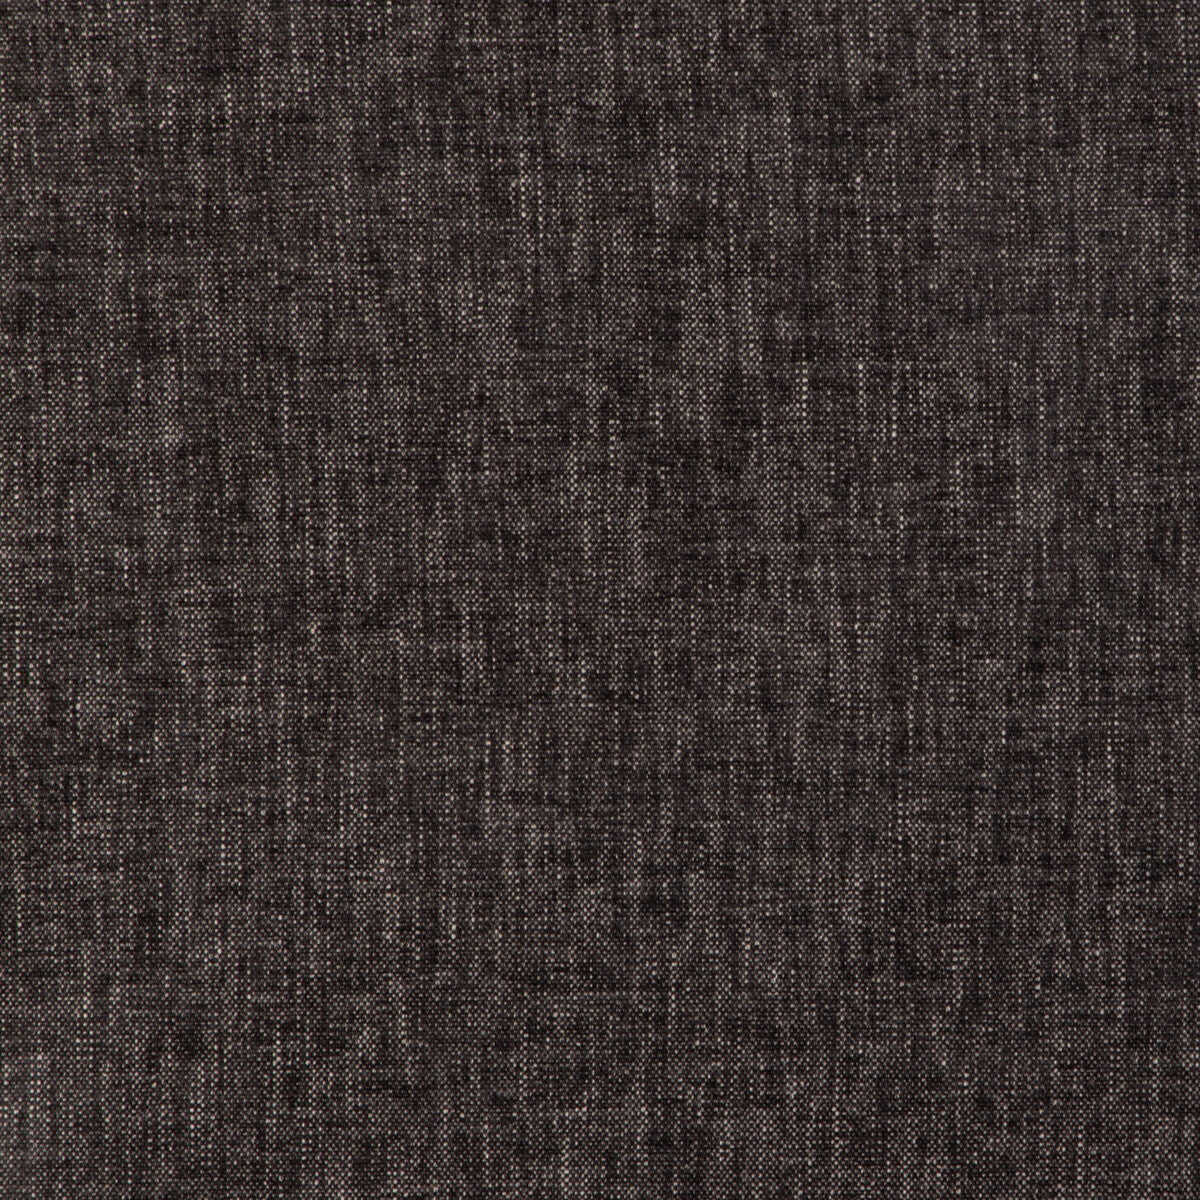 Kravet Smart fabric in 36663-21 color - pattern 36663.21.0 - by Kravet Smart in the Performance Kravetarmor collection